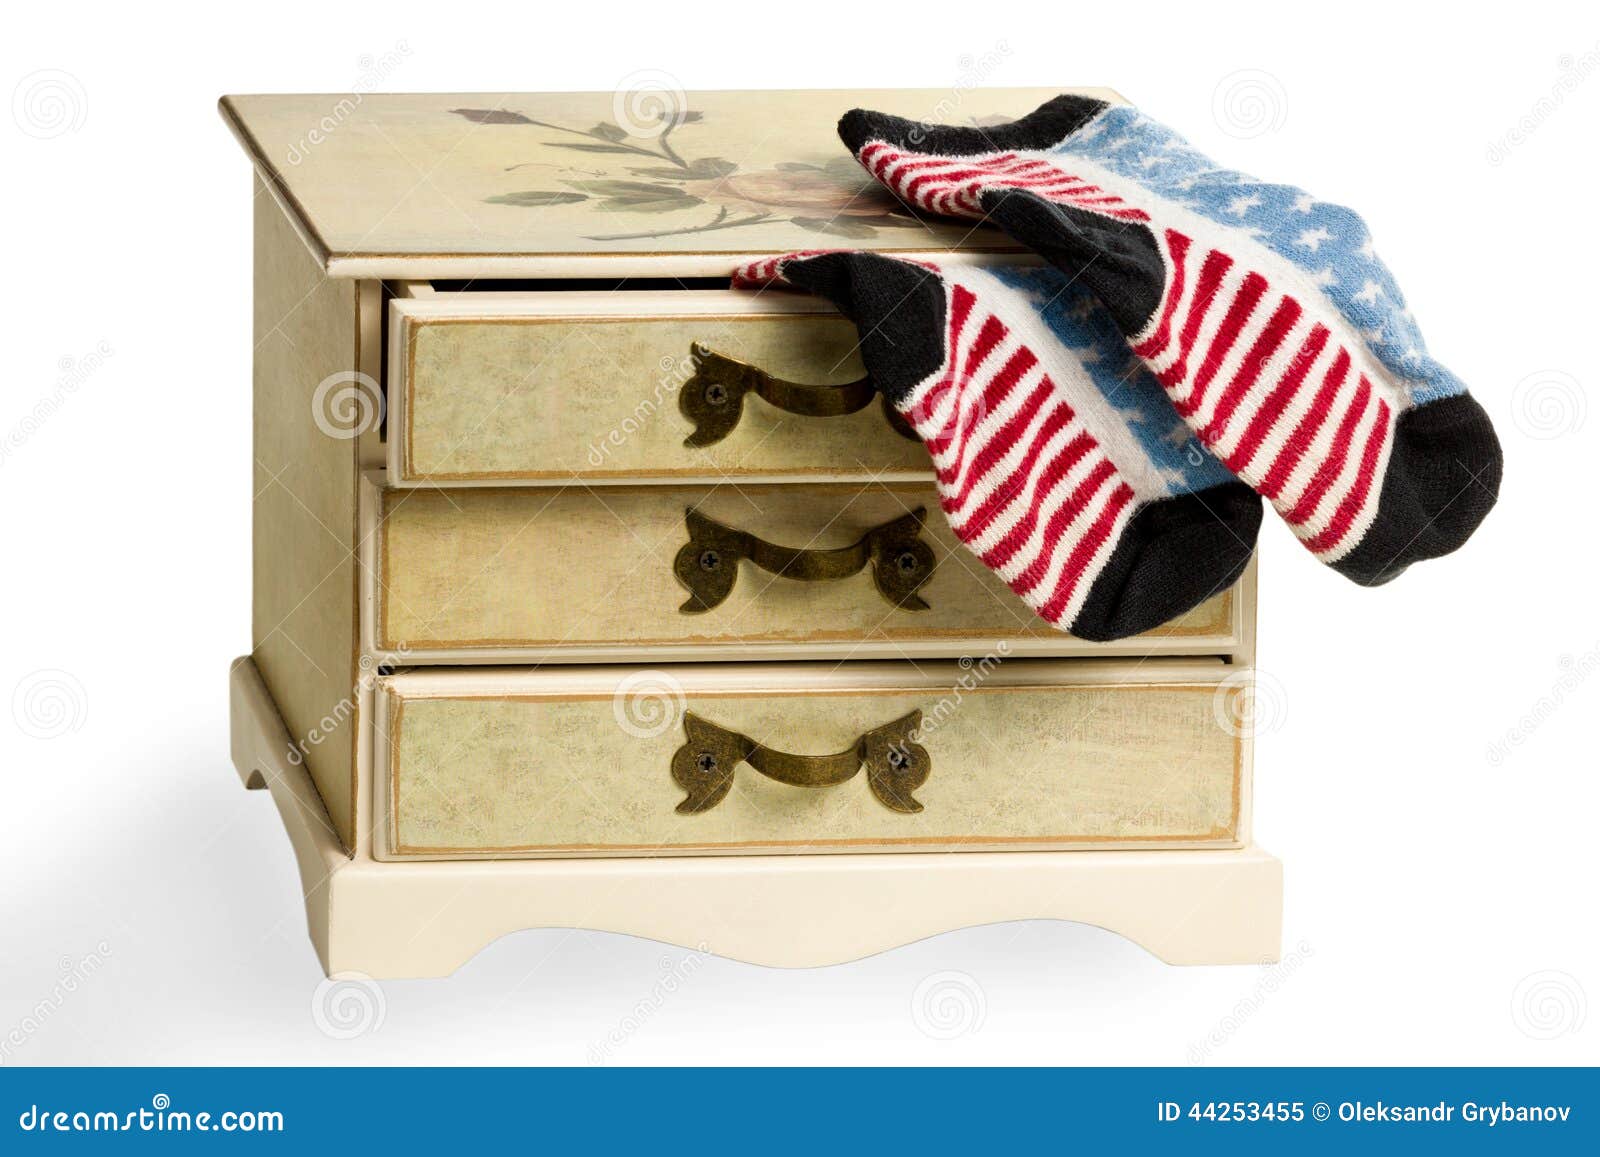 Socks As The American Flag On Dresser Stock Image Image Of Jolly